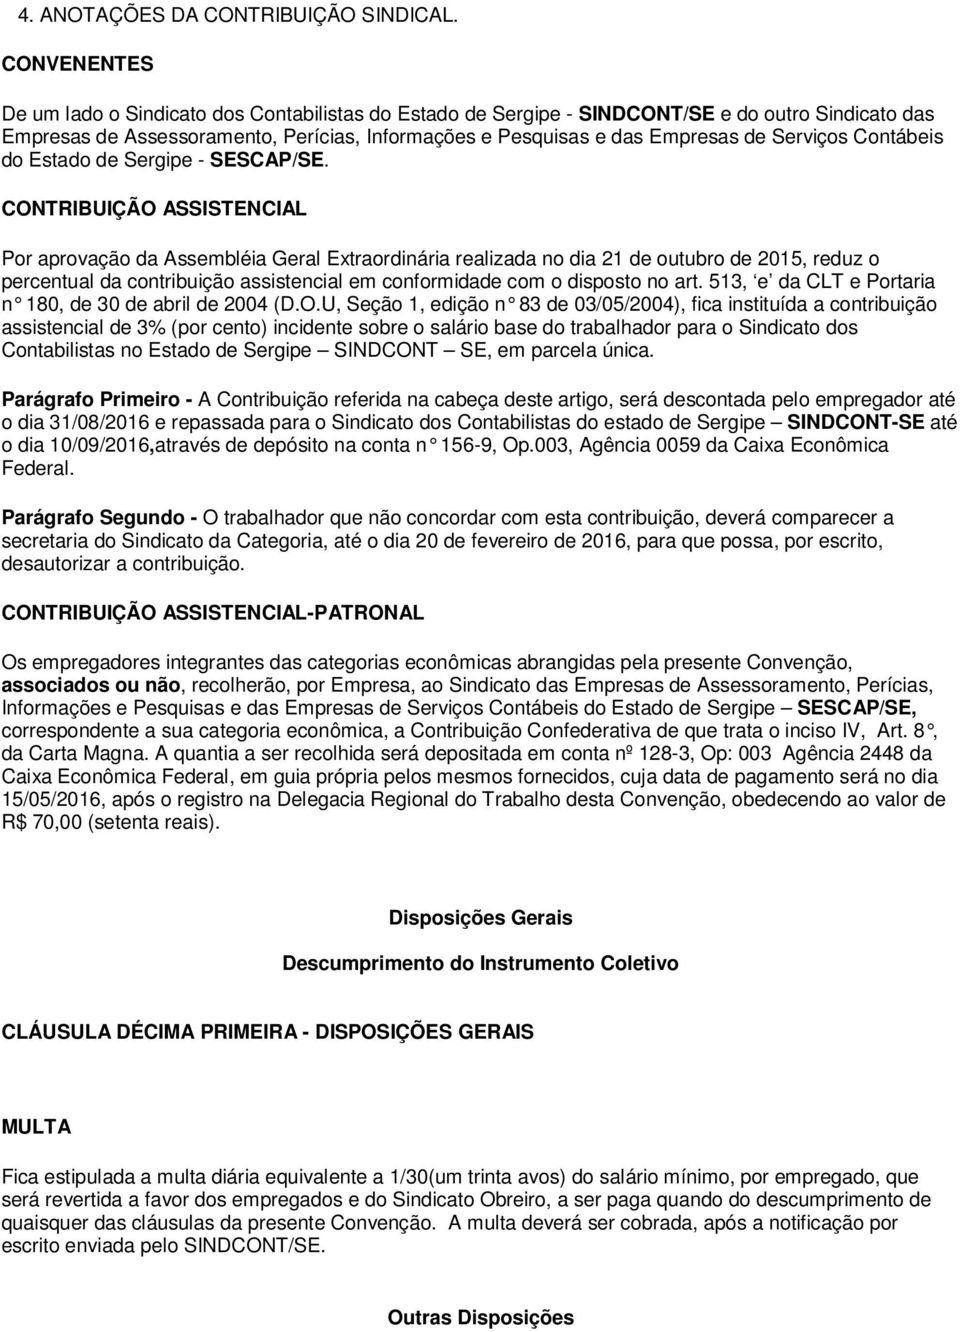 Serviços Contábeis do Estado de Sergipe - SESCAP/SE.